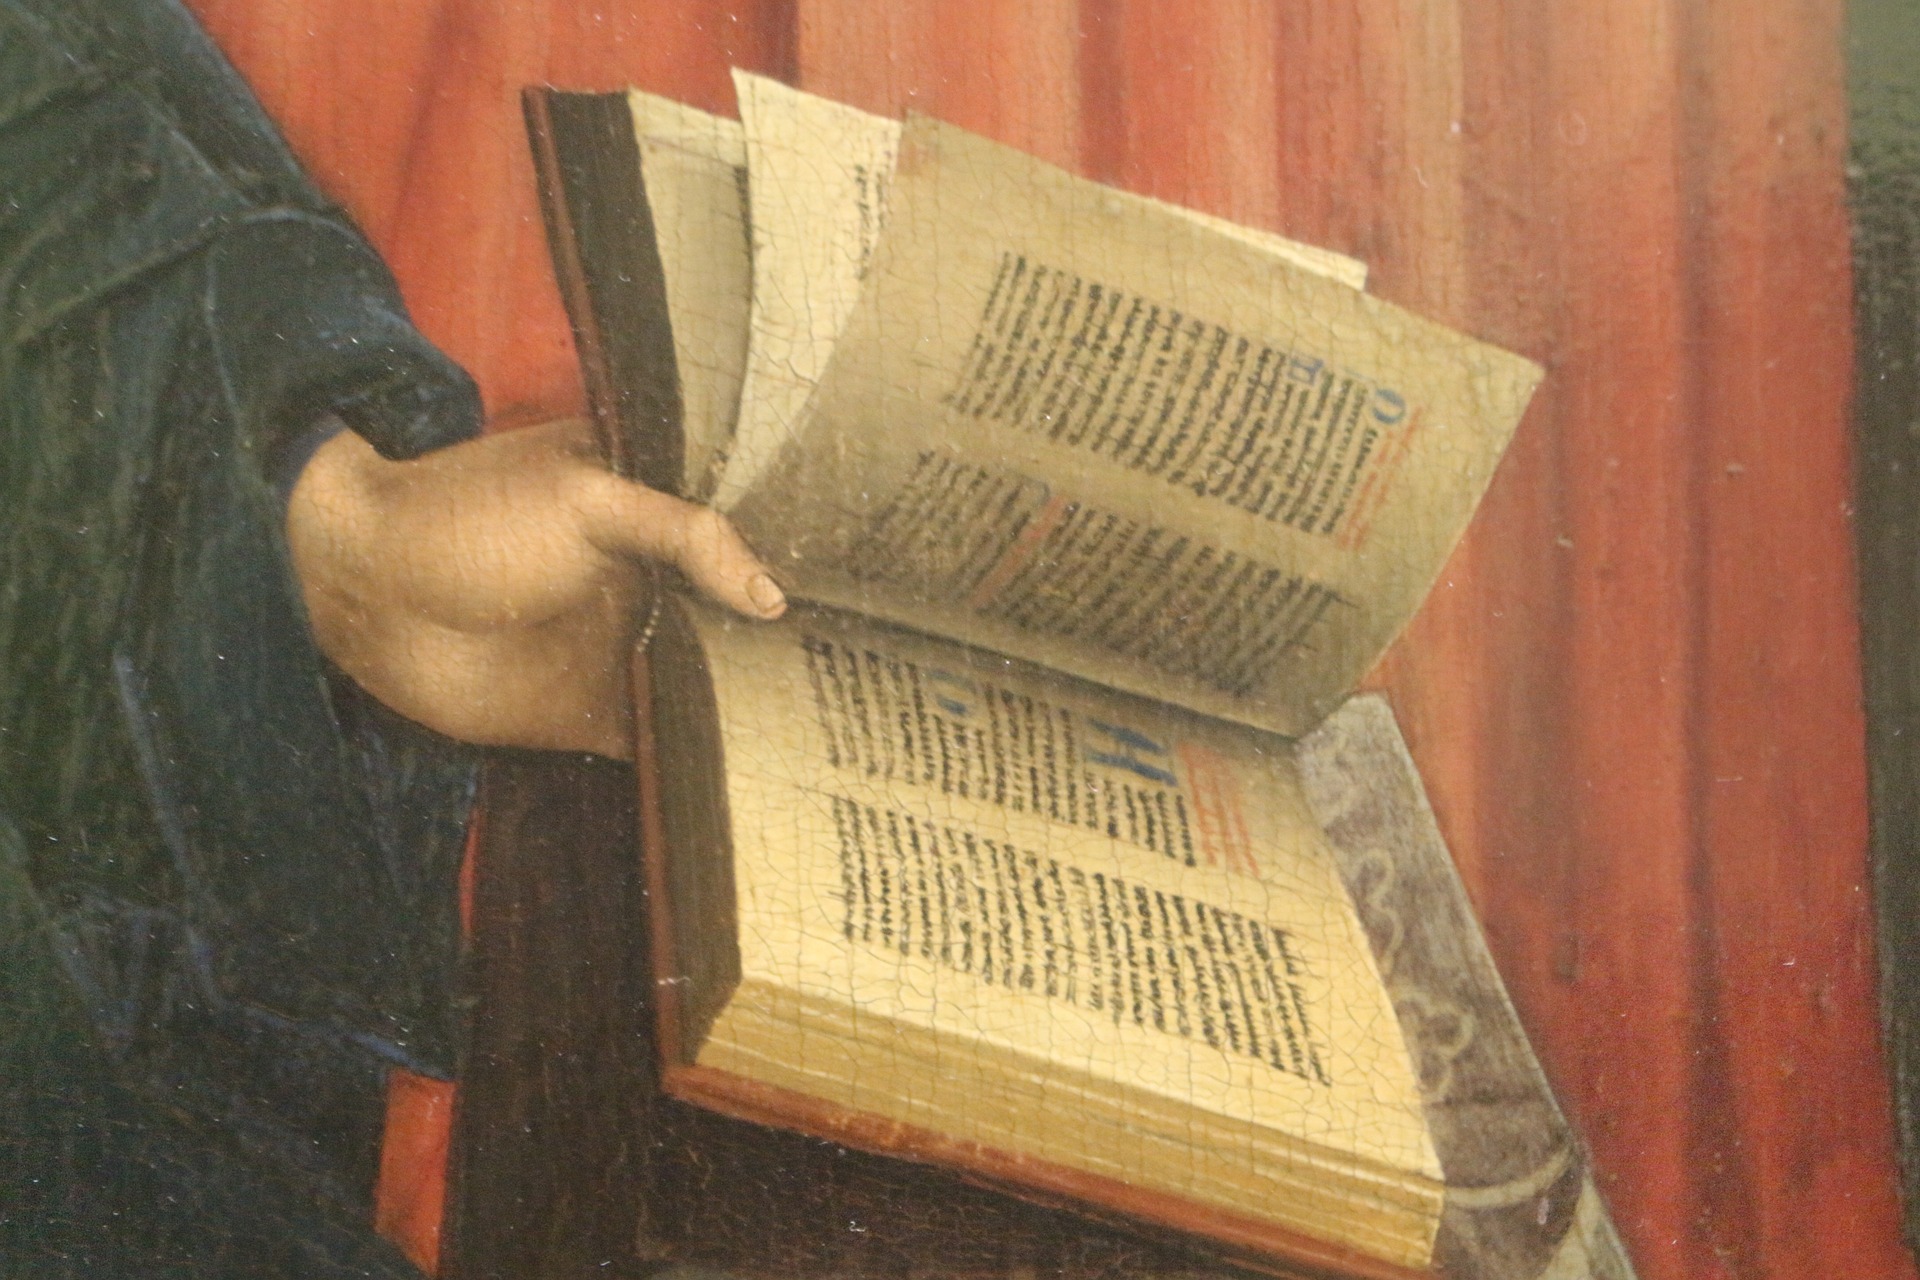 Historical art showcasing a hand holding a book